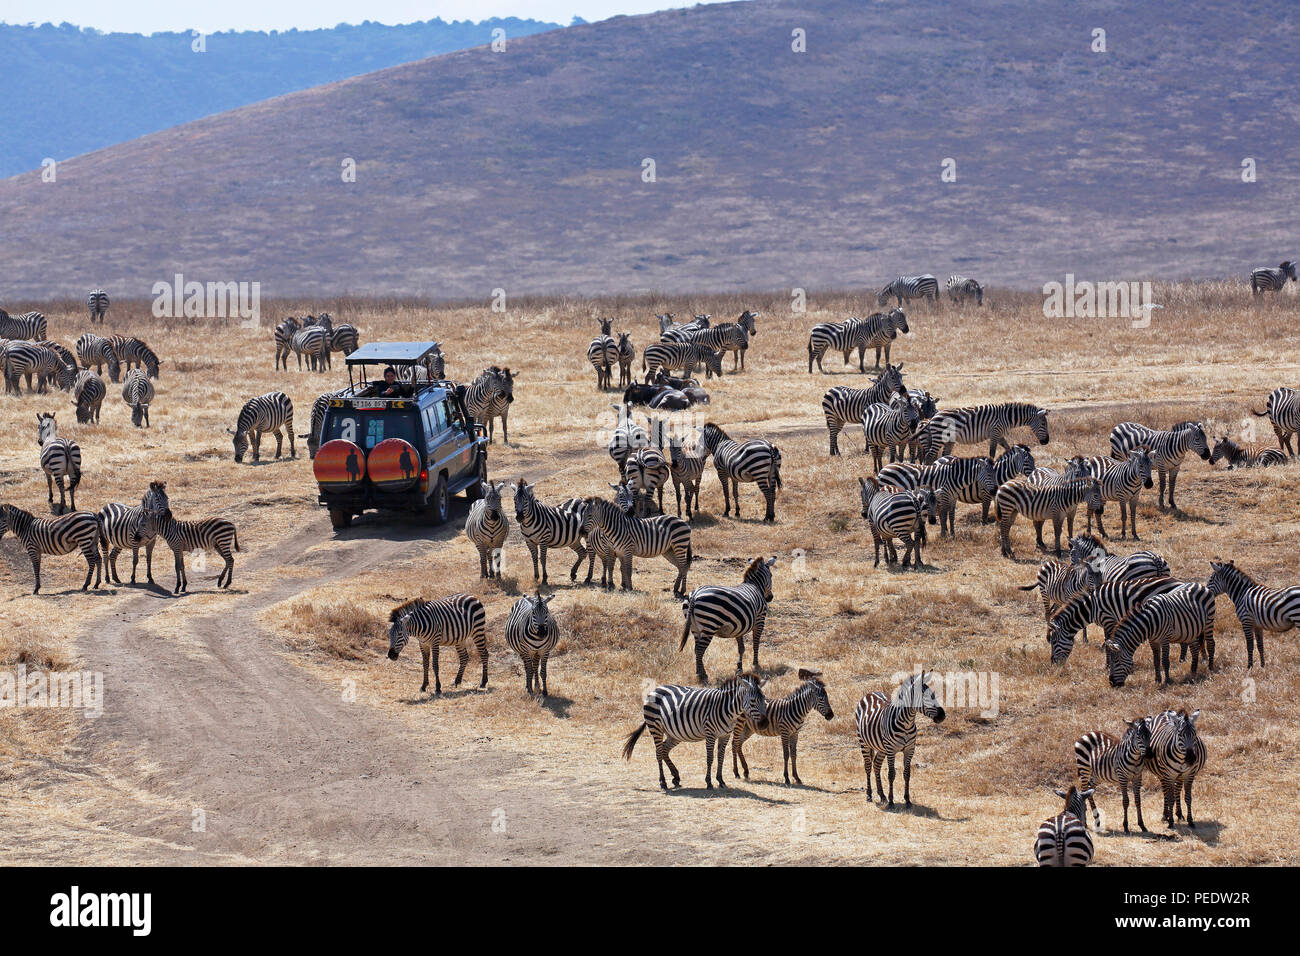 Touristin auf Safari beobachtet Steppenzebras, Ngorongoro-Krater, Serengeti Nationalpark, Weltnaturerbe der UNESCO, Tansania, Ostafrika, Afrika Stock Photo